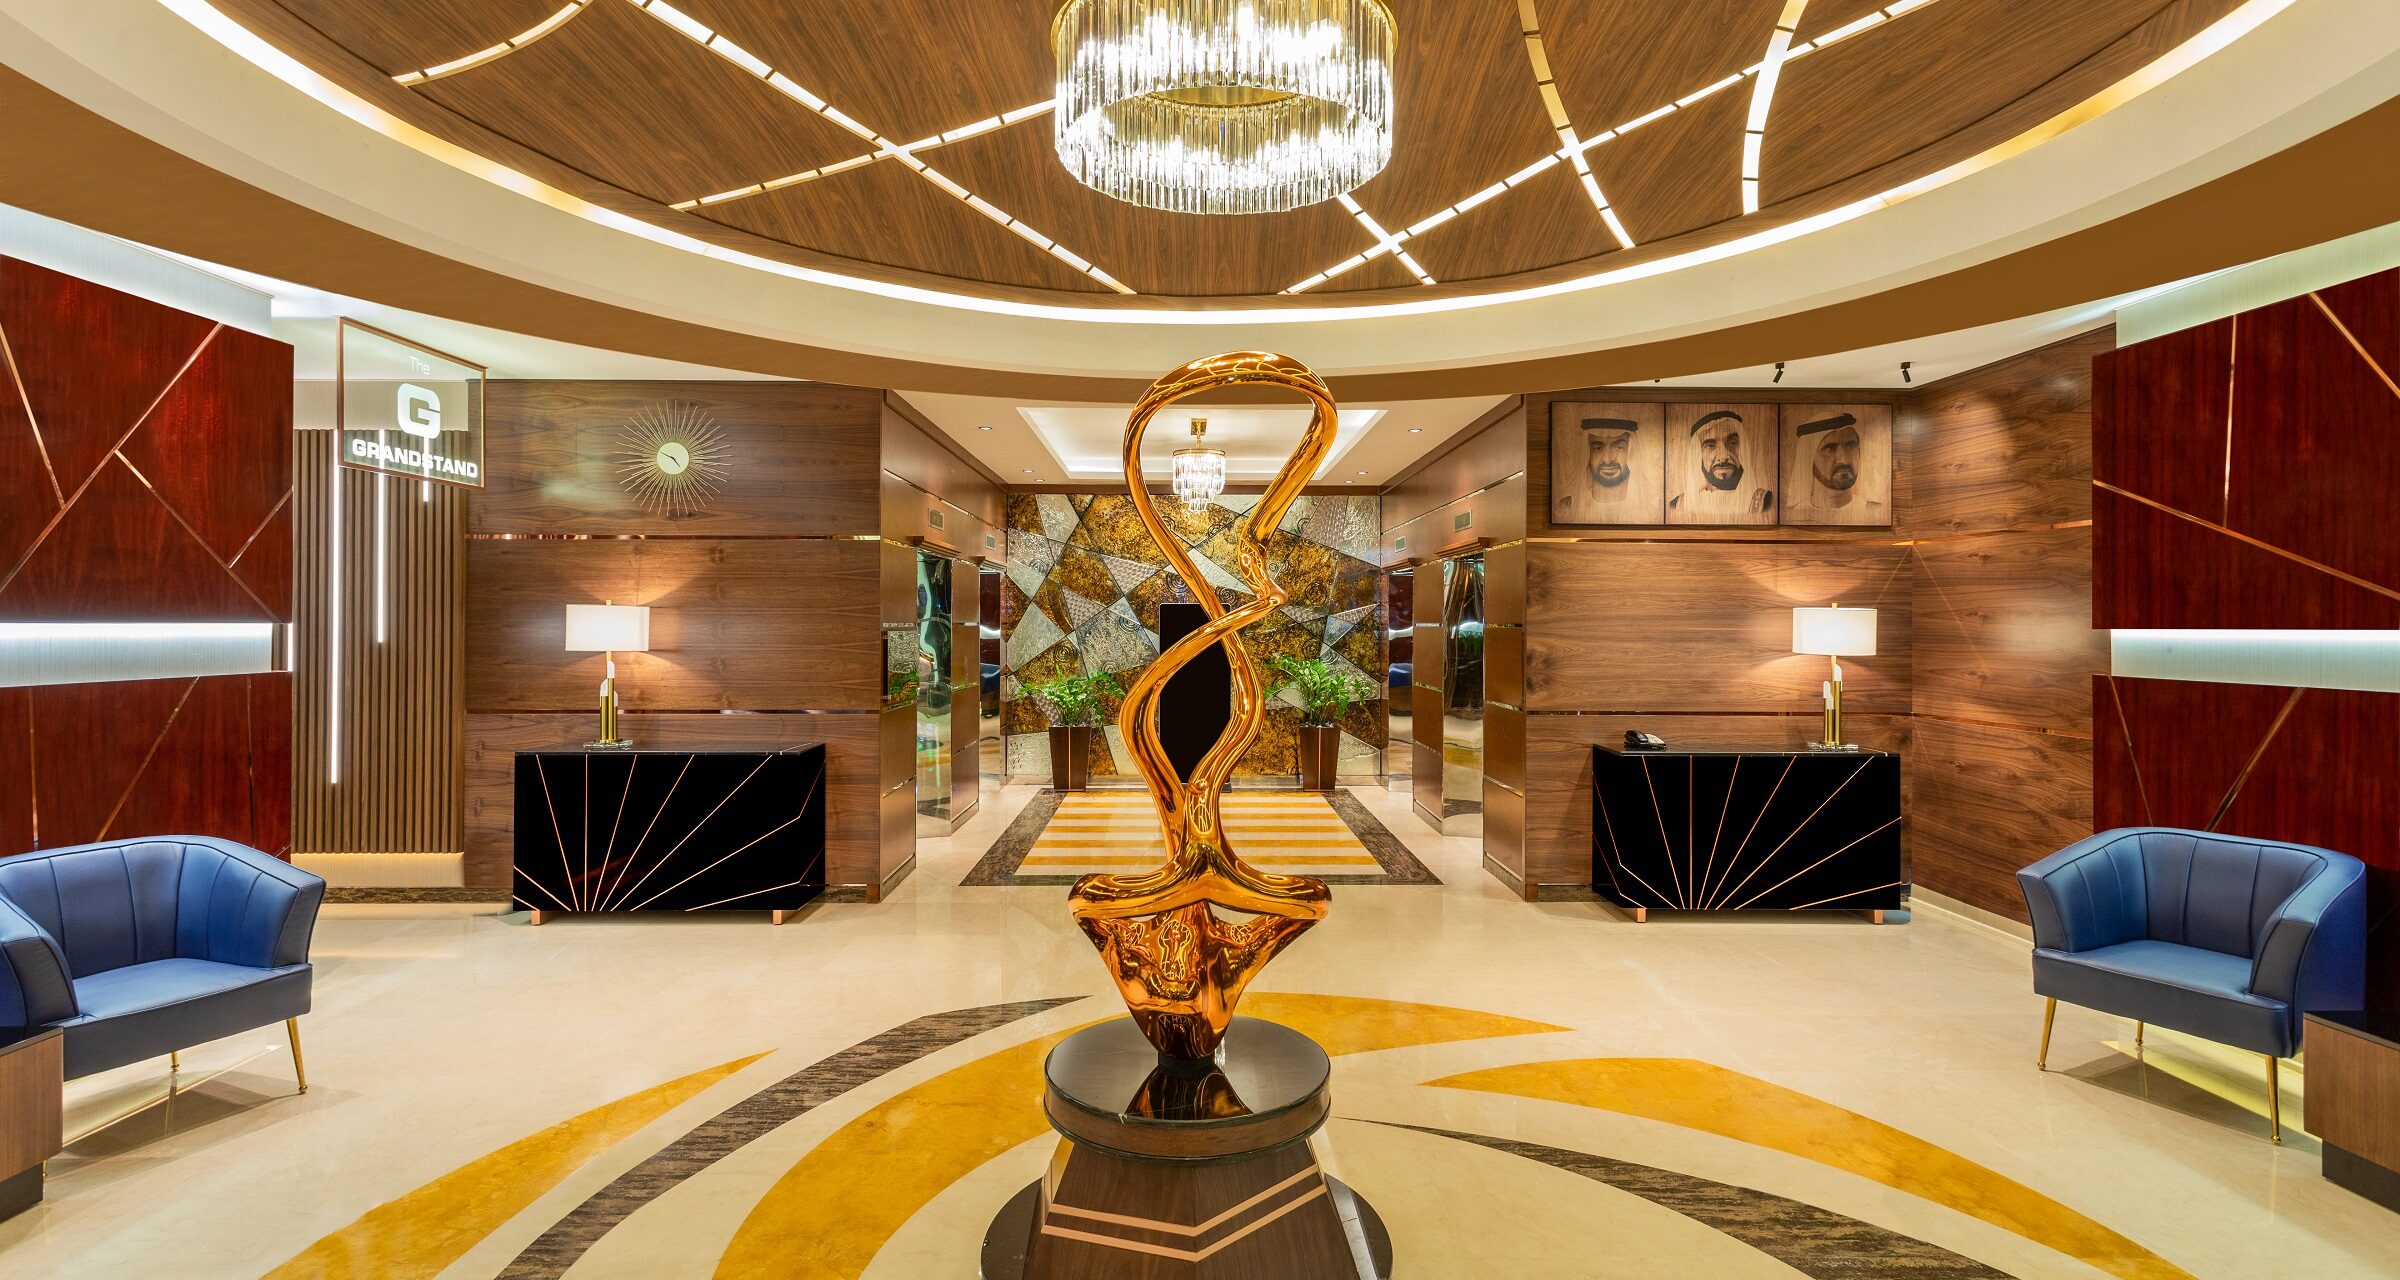 The Hotel - Lobby Image